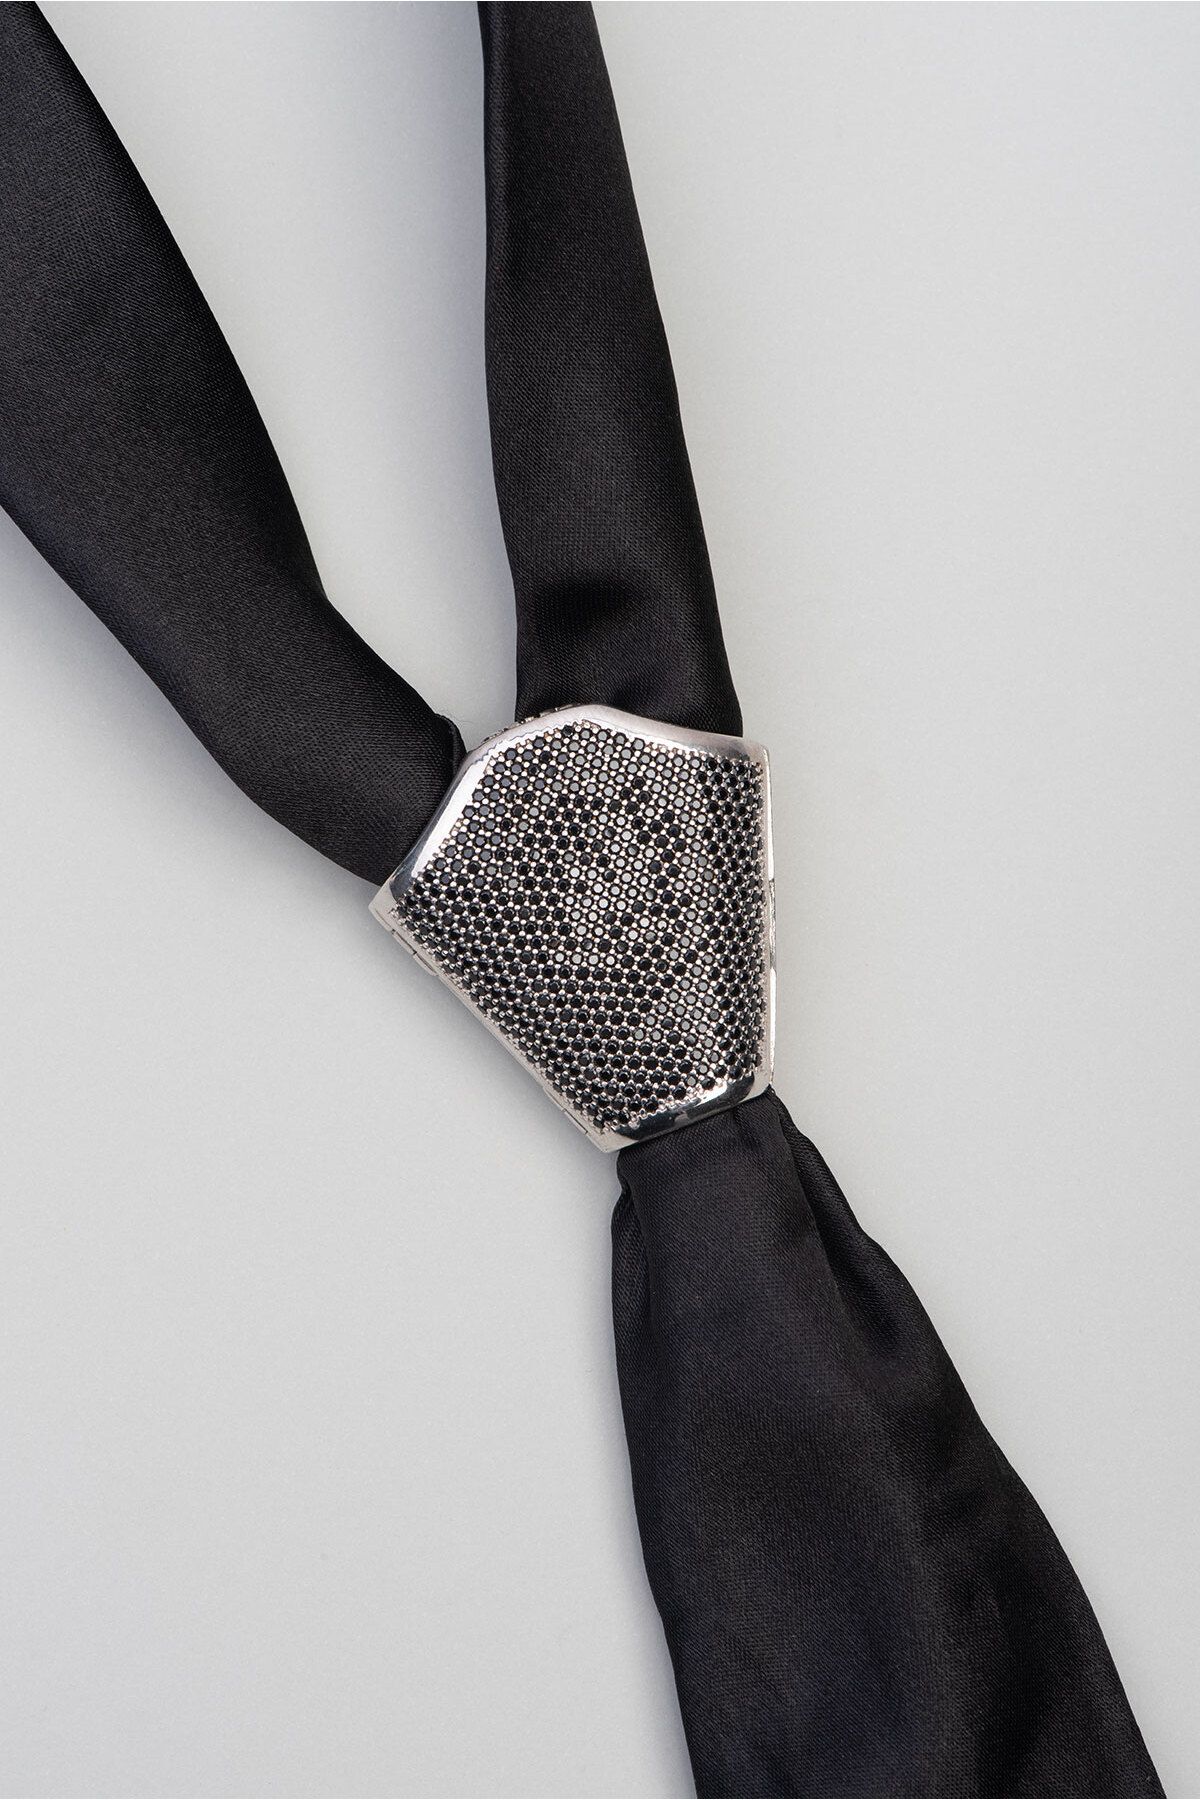 So Chic Siyah Taşlı Gümüş Tasarım Kravat Tokası